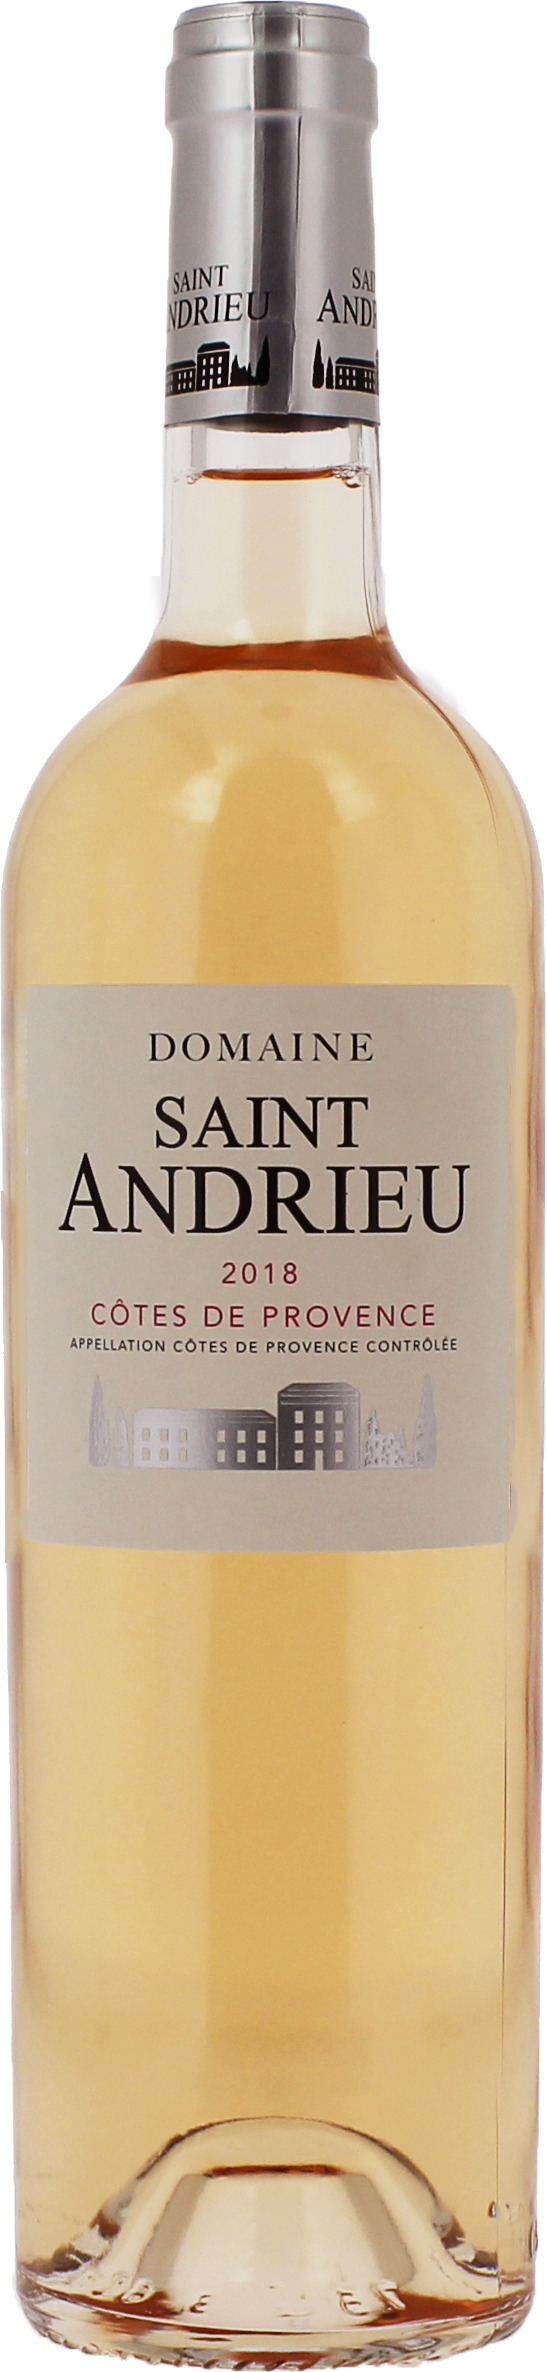 Domaine saint andrieu 2018  Cotes de Provence, Slection provence ros